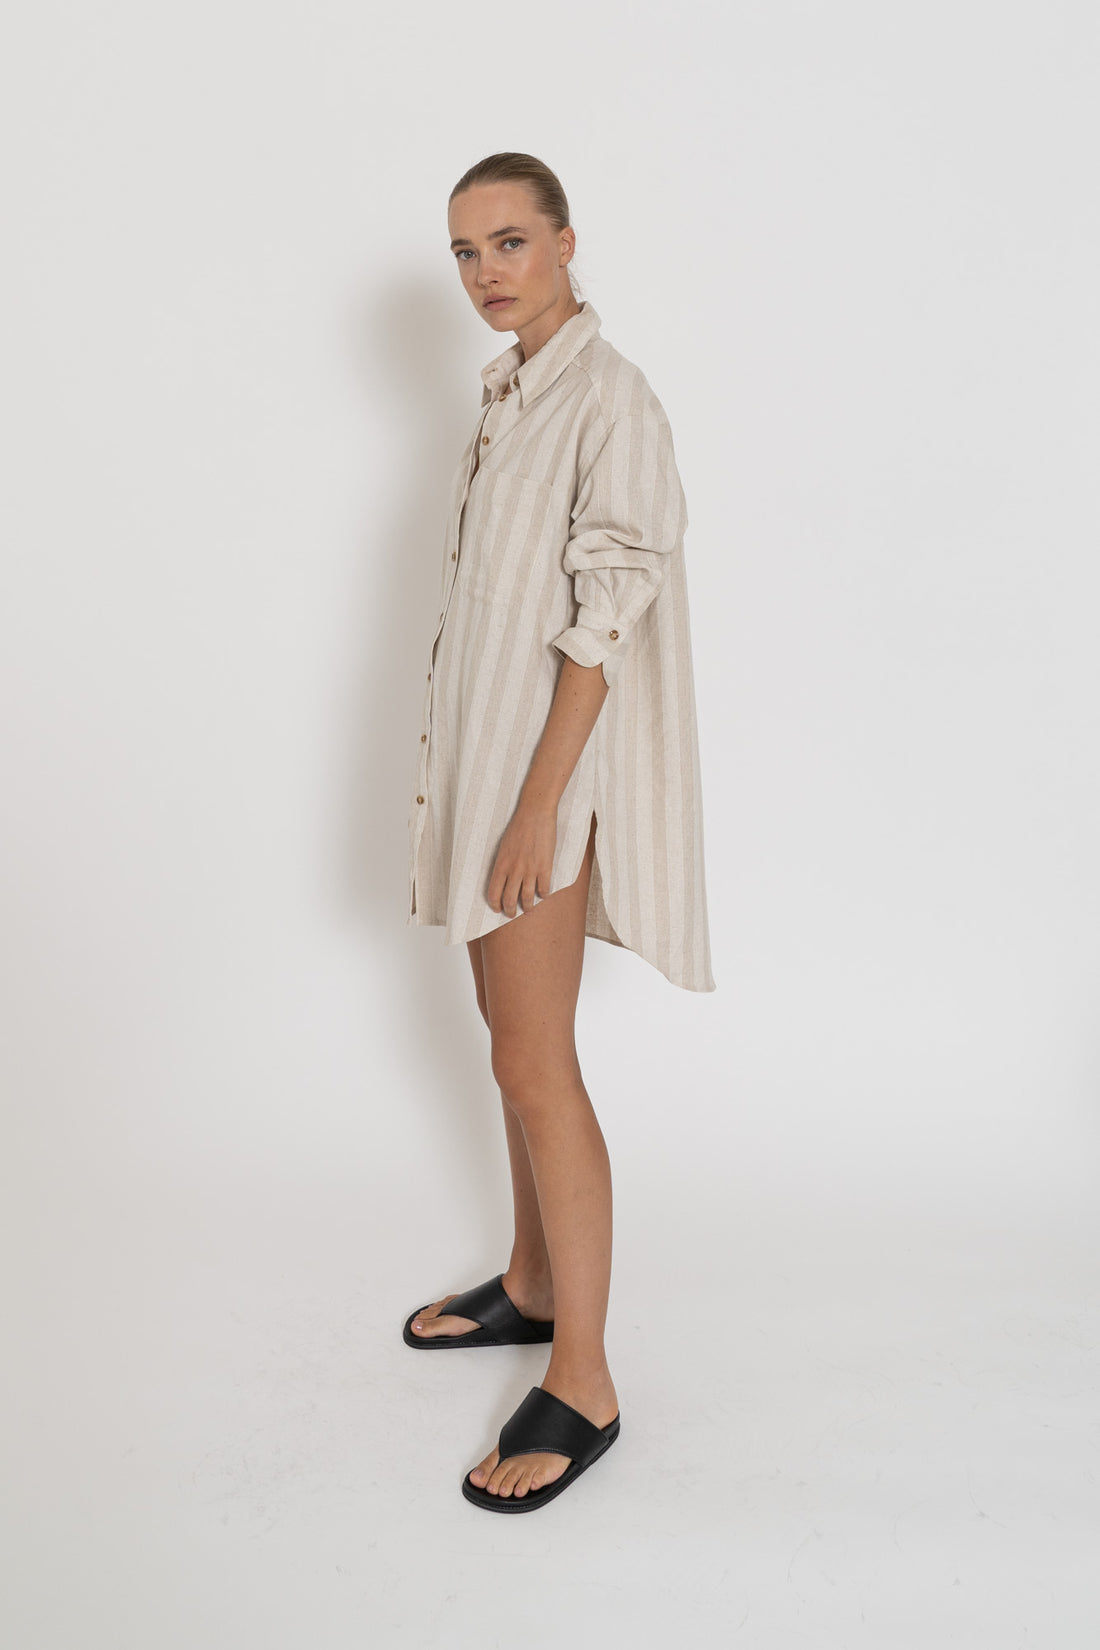 'Capri Shirt Dress' - Neutral Stripe